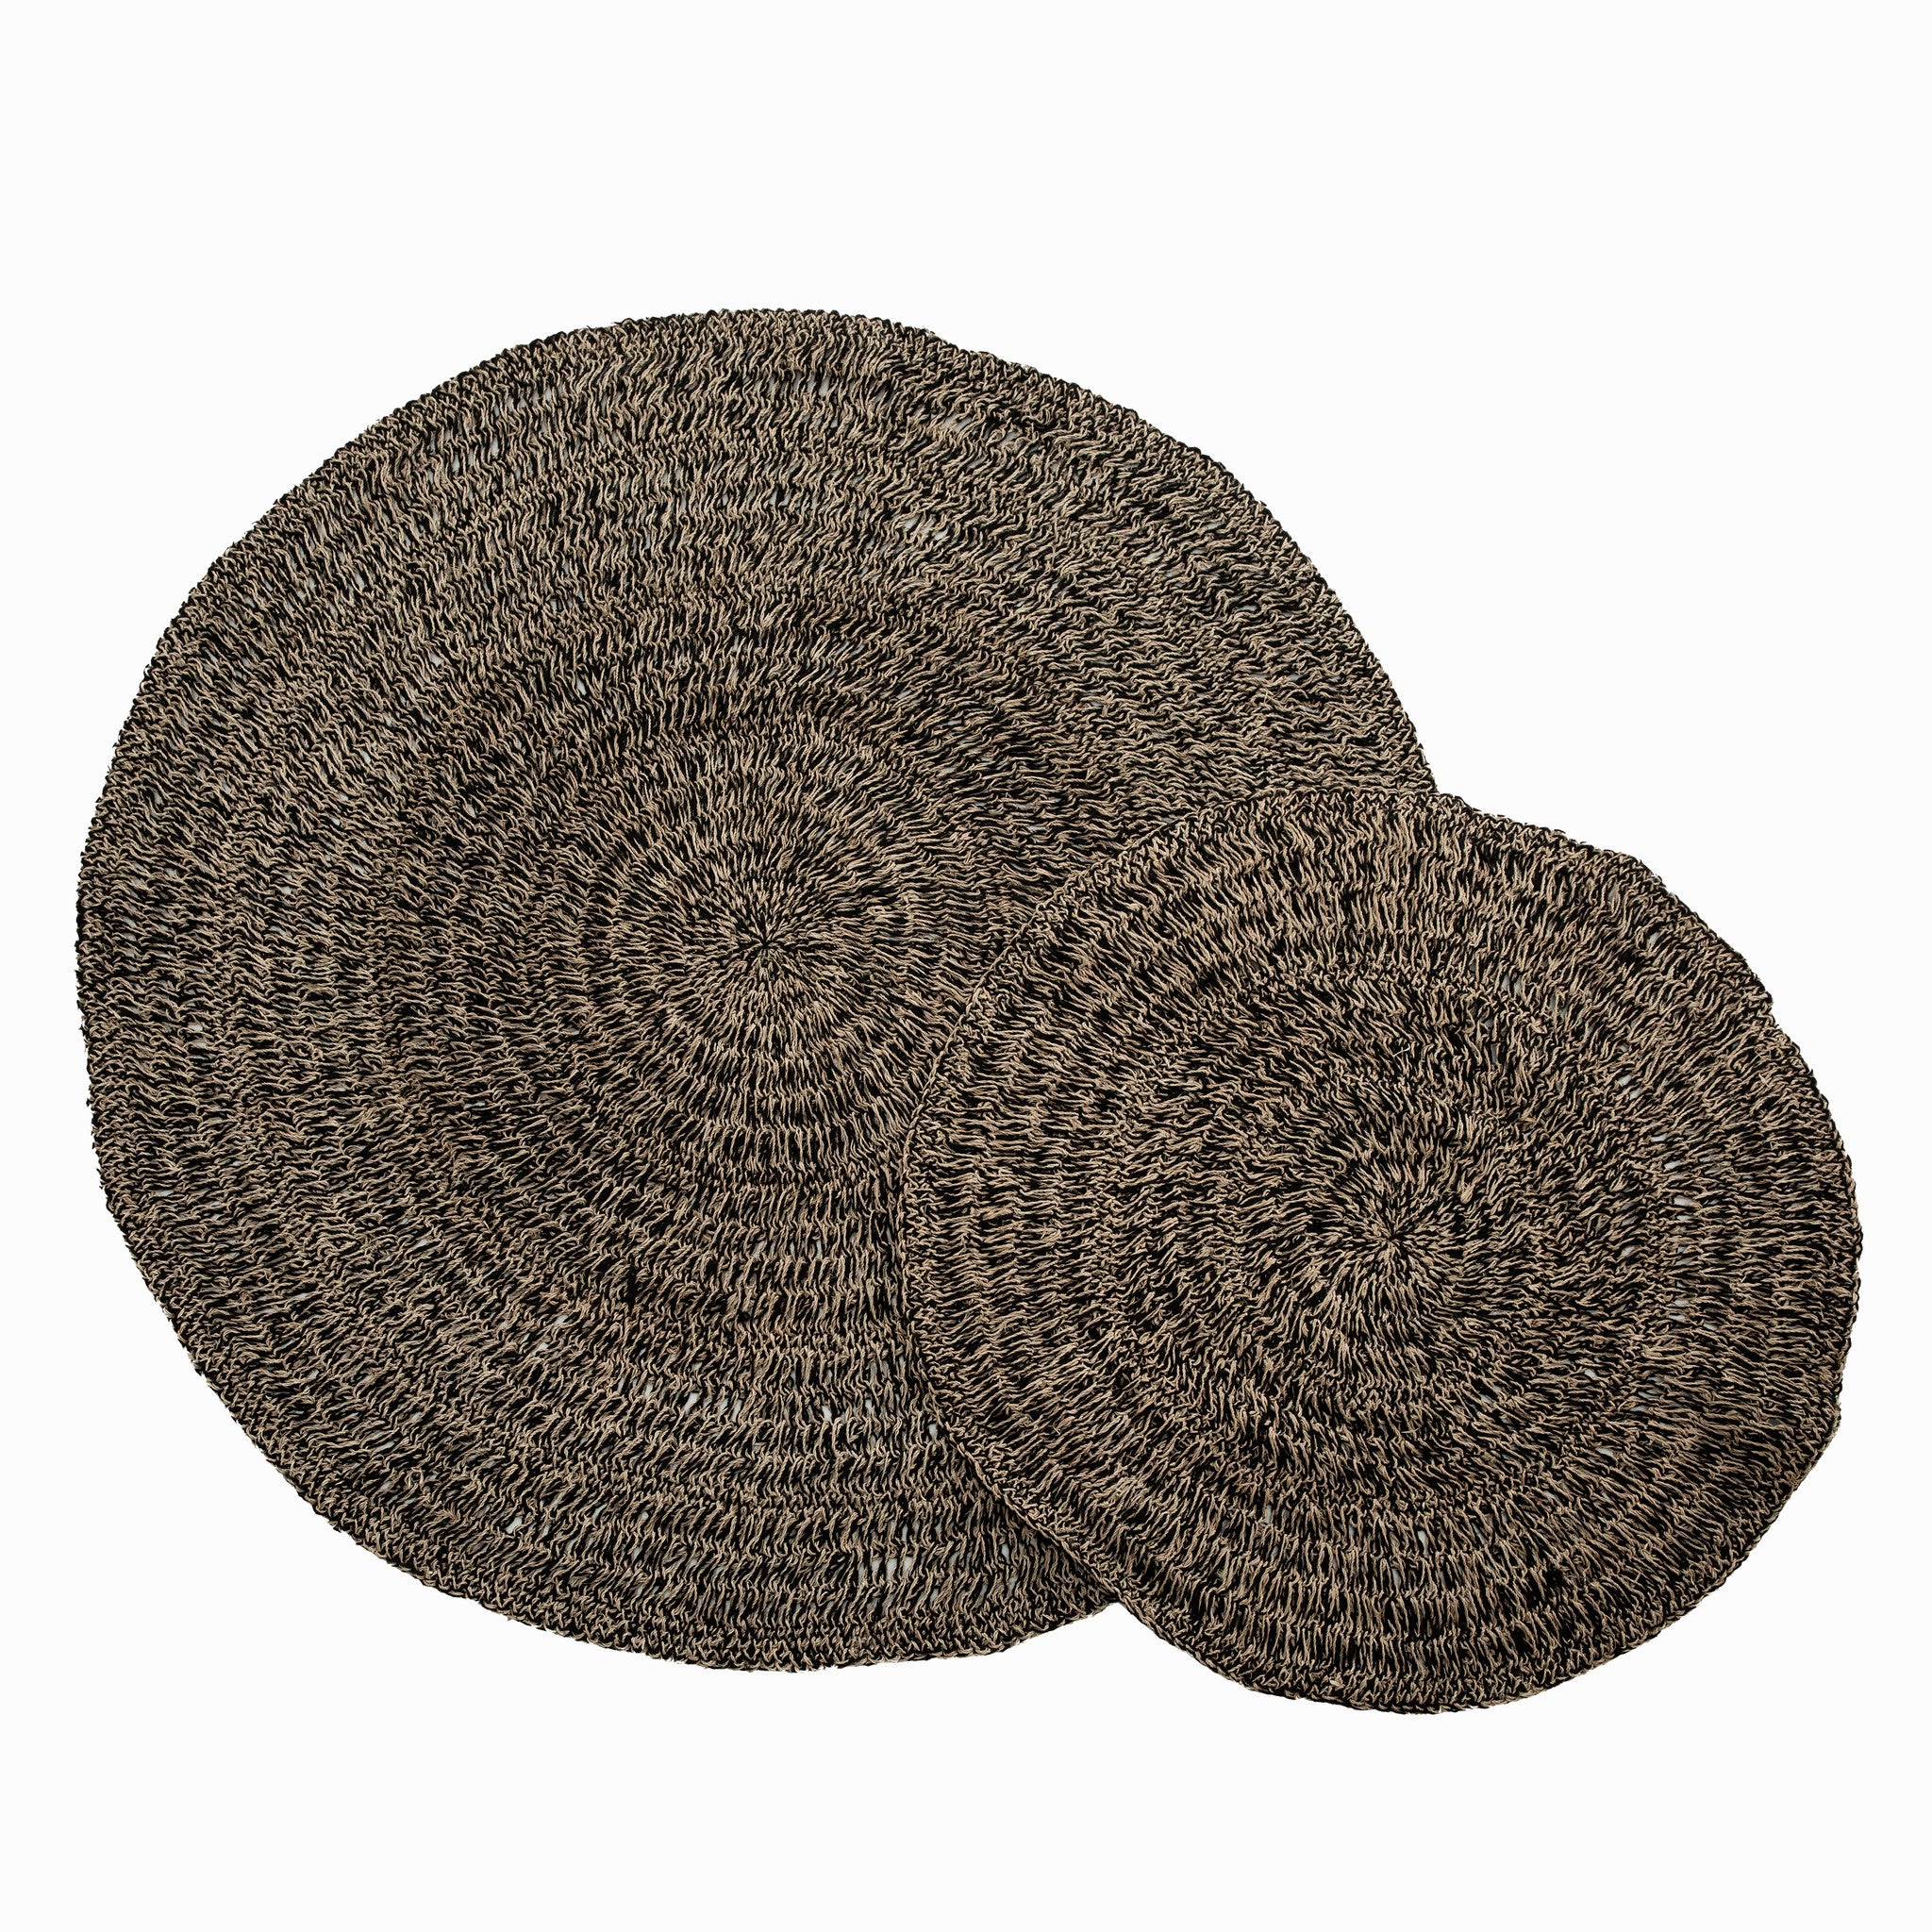 Seagrass carpet - Natural black - 150